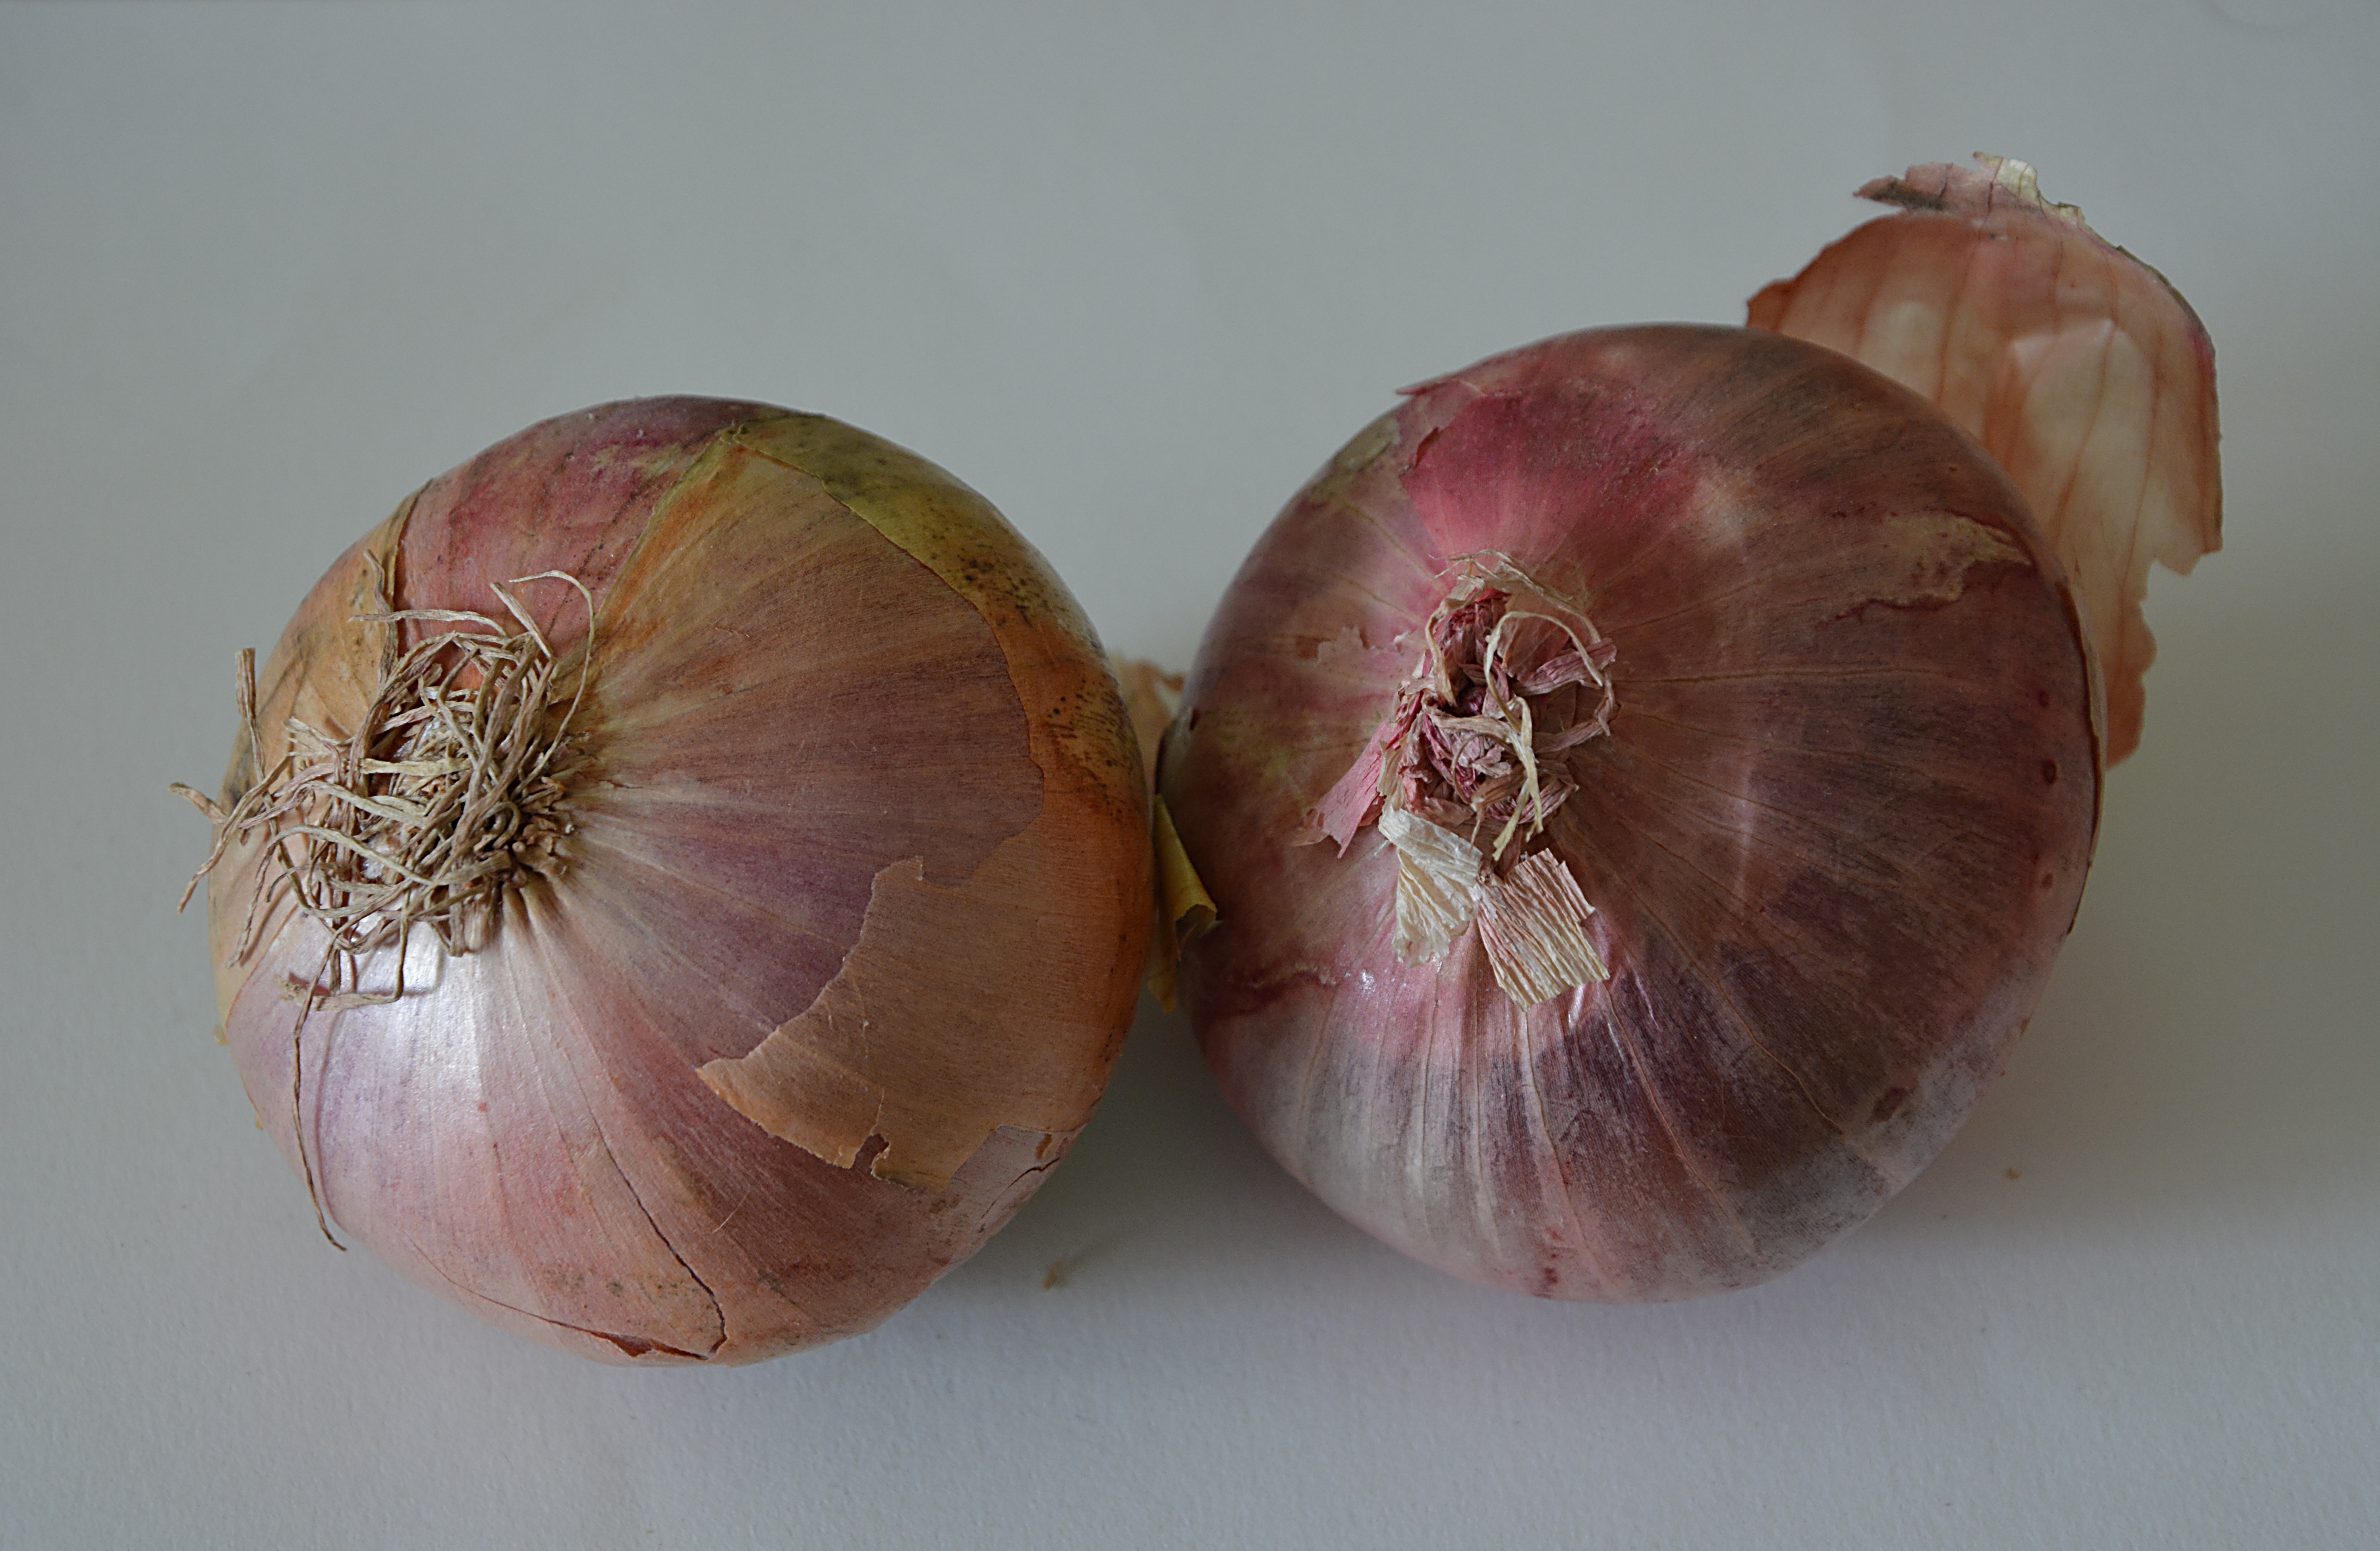 How many onions have we got. Лук-шалот корнеплоды. Лук овощ. Персидский лук.